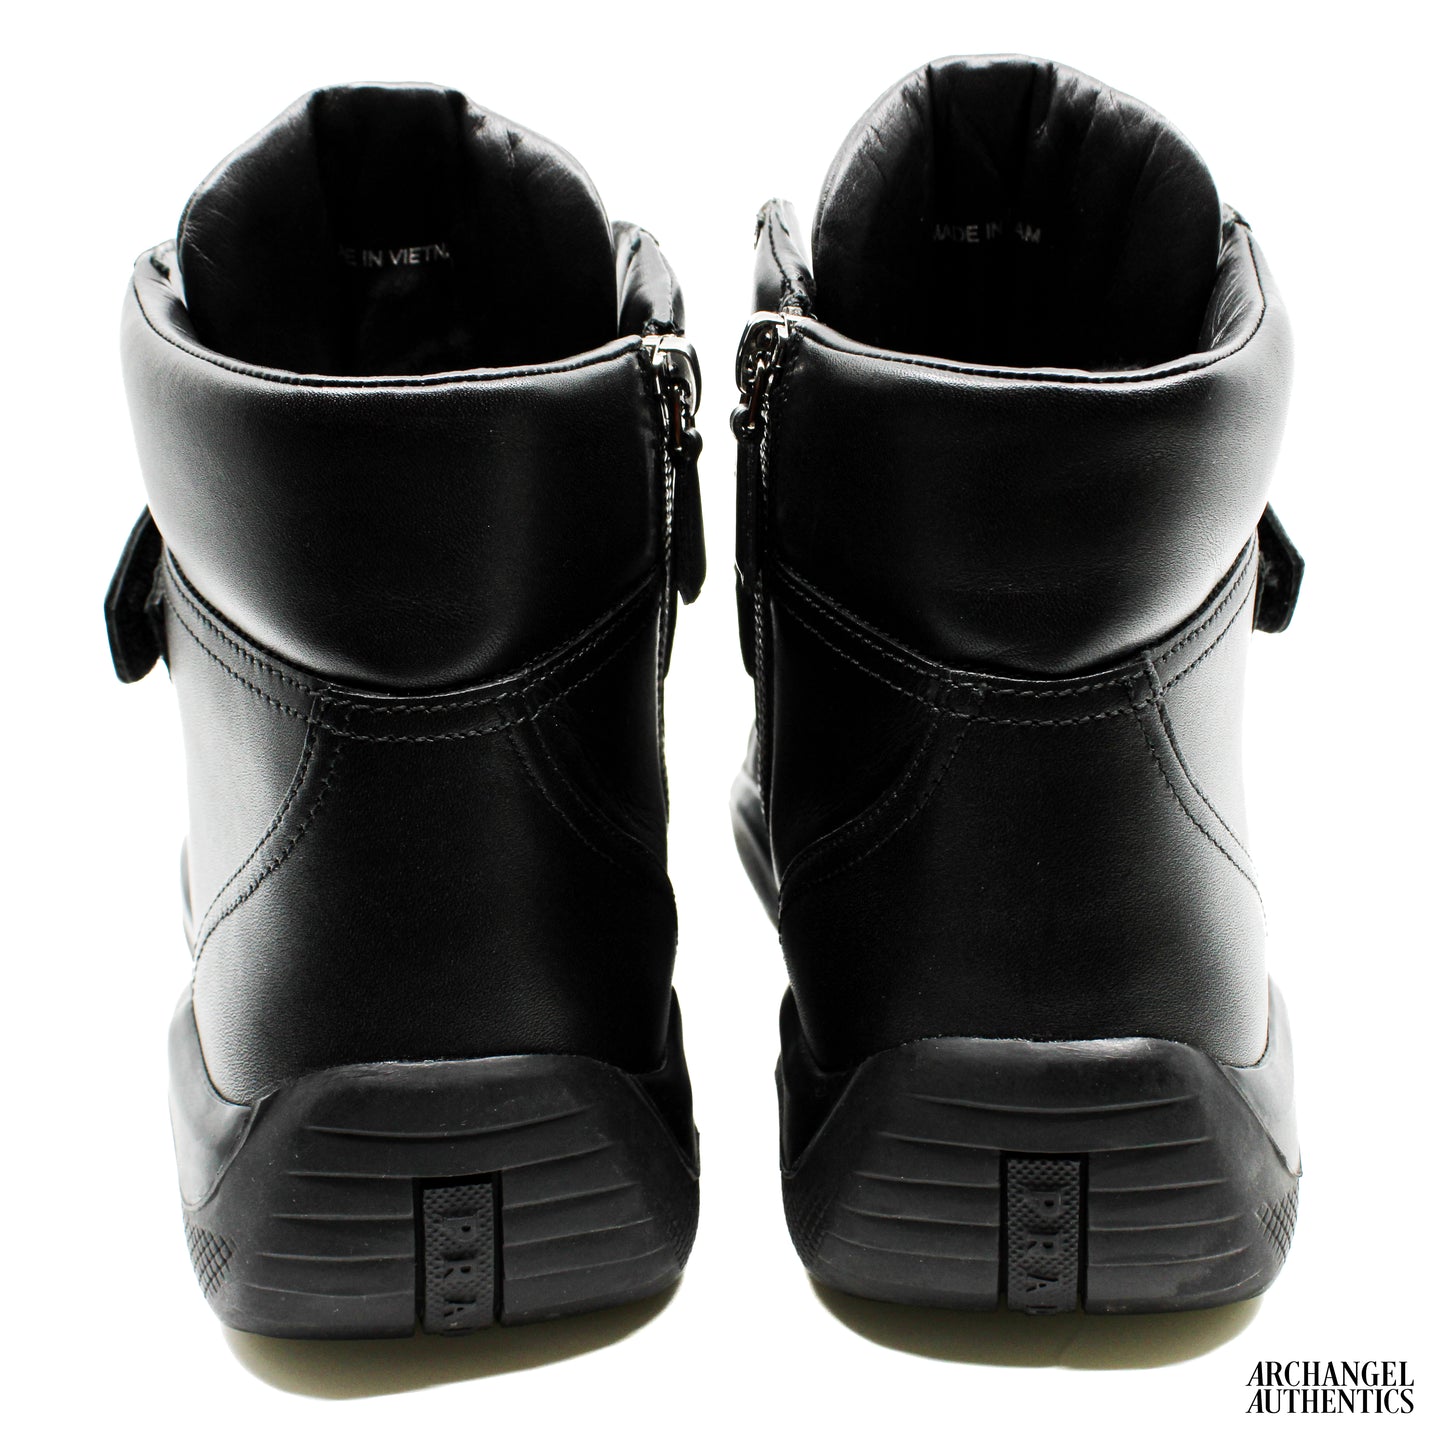 Prada Men's Black Leather Ankle Boot Sneaker Calzature Uomo